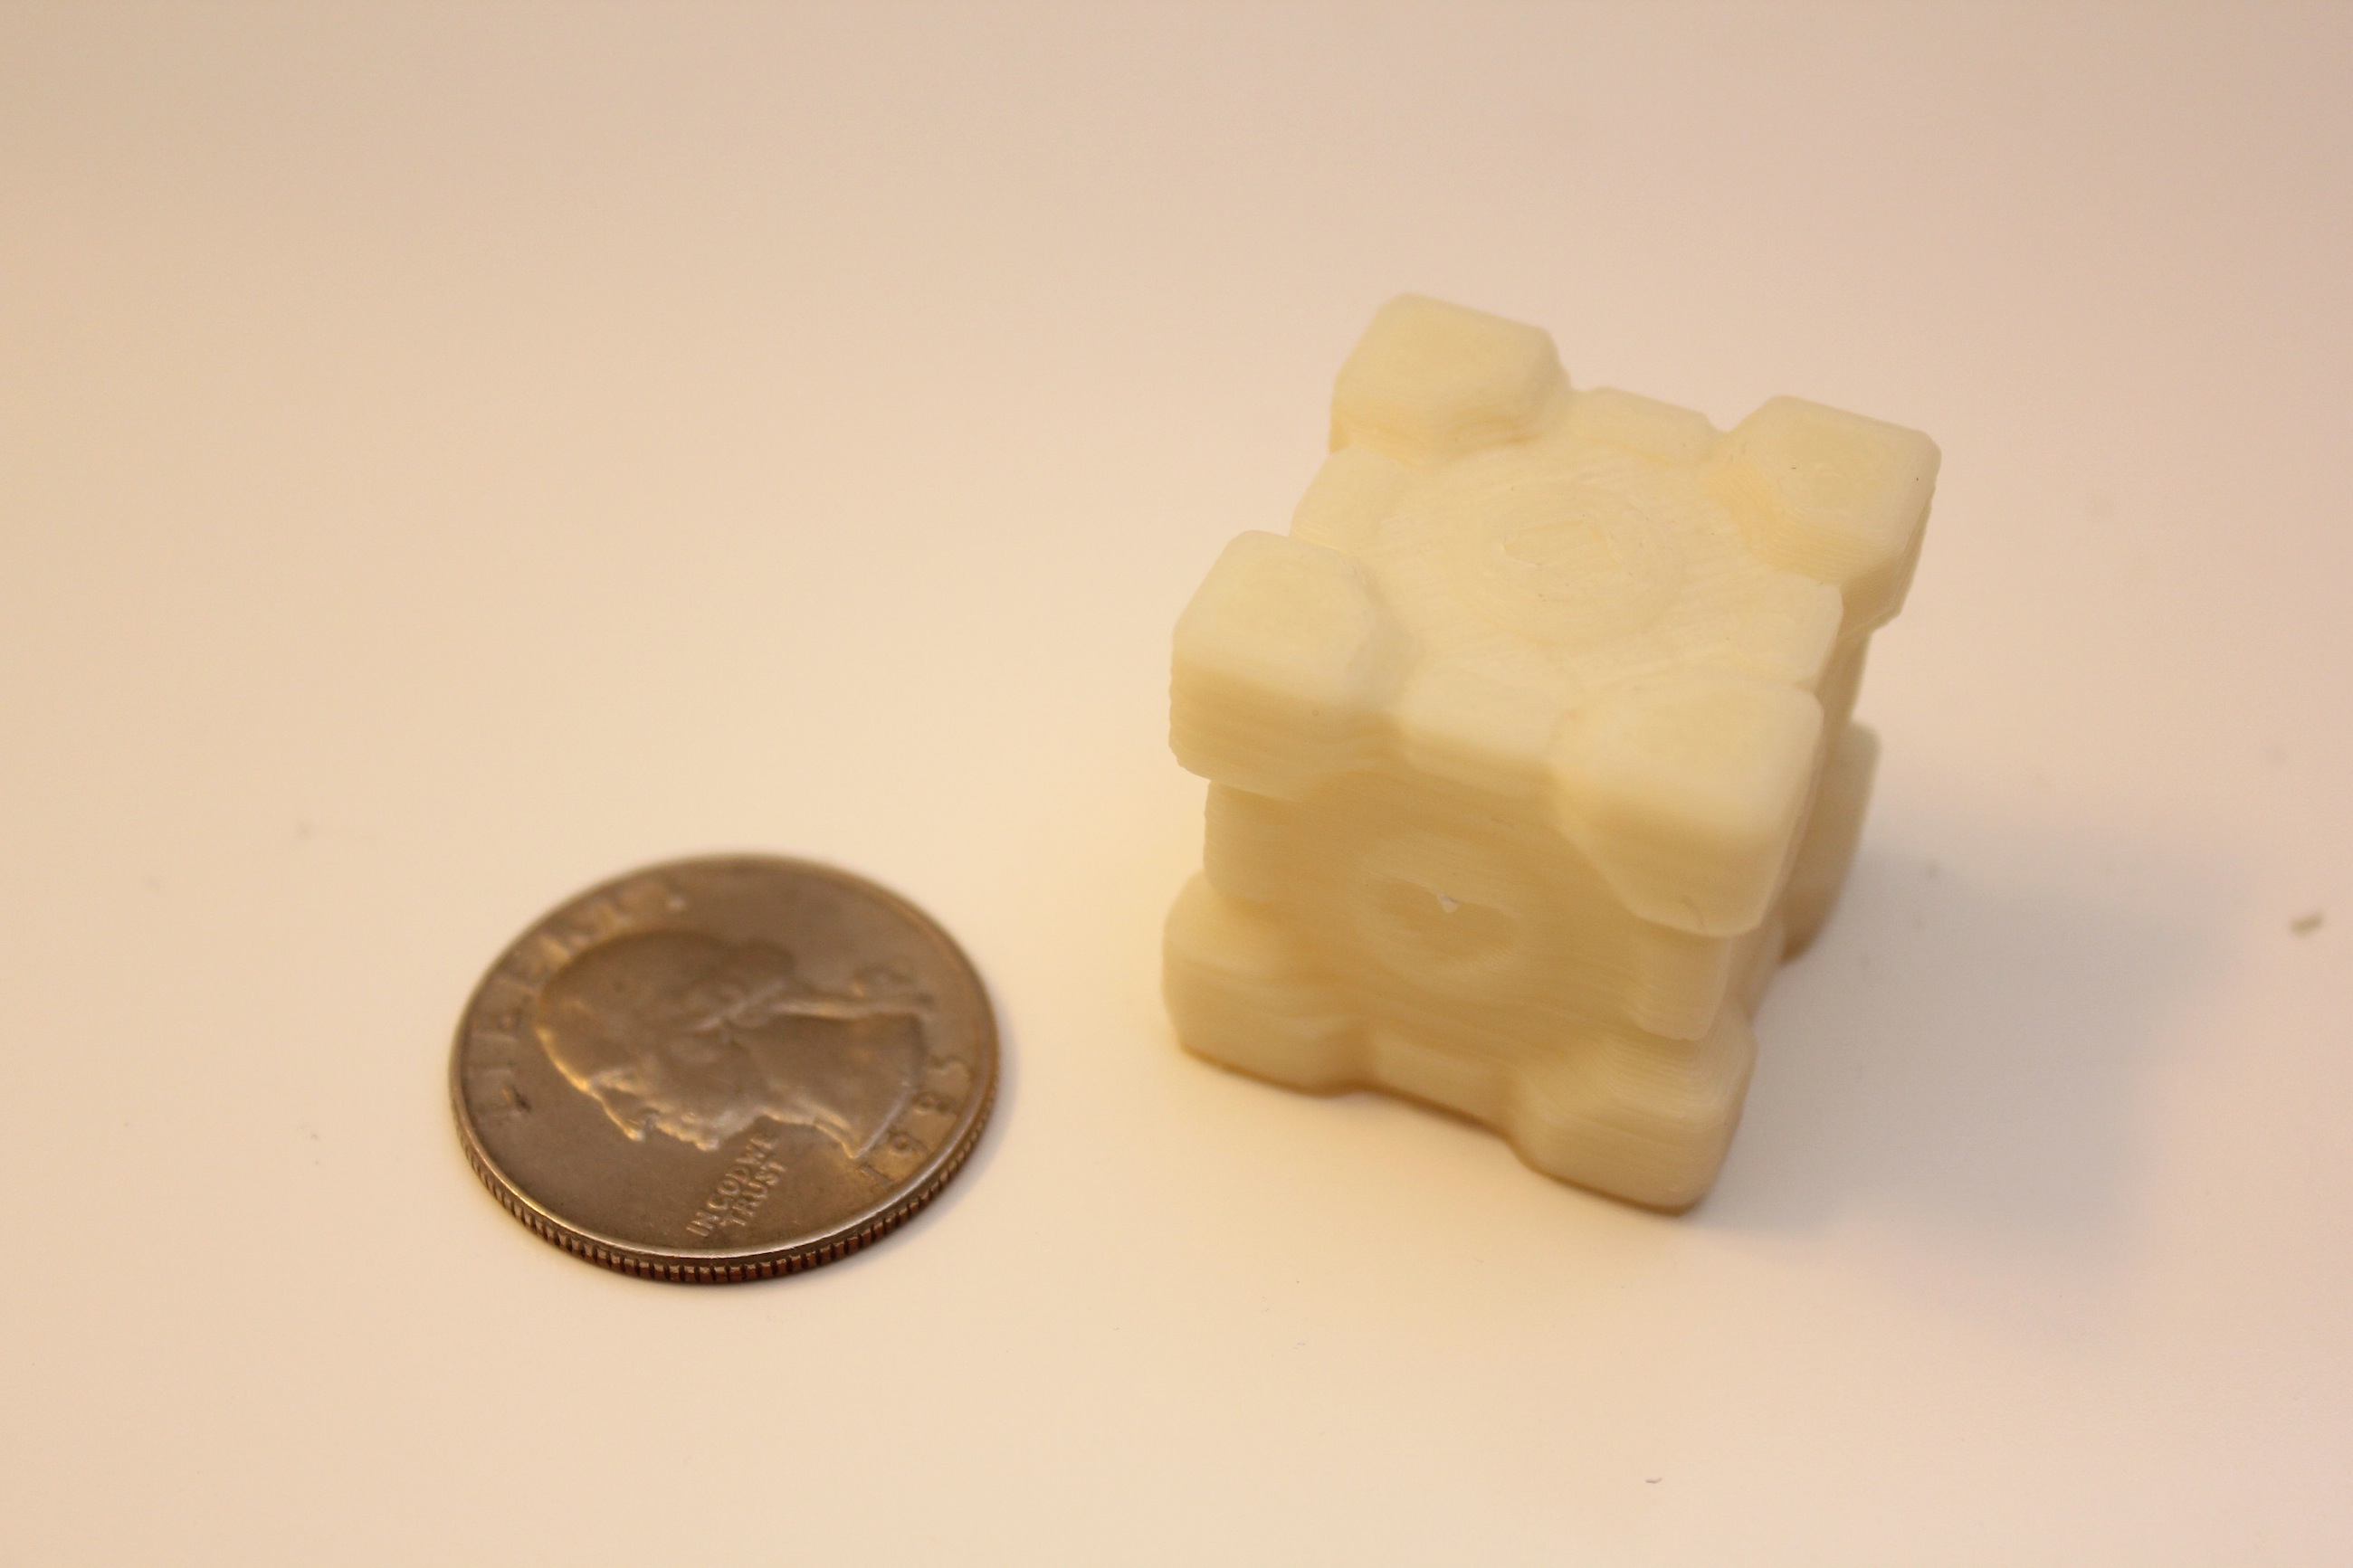 Companion cube 3D printed